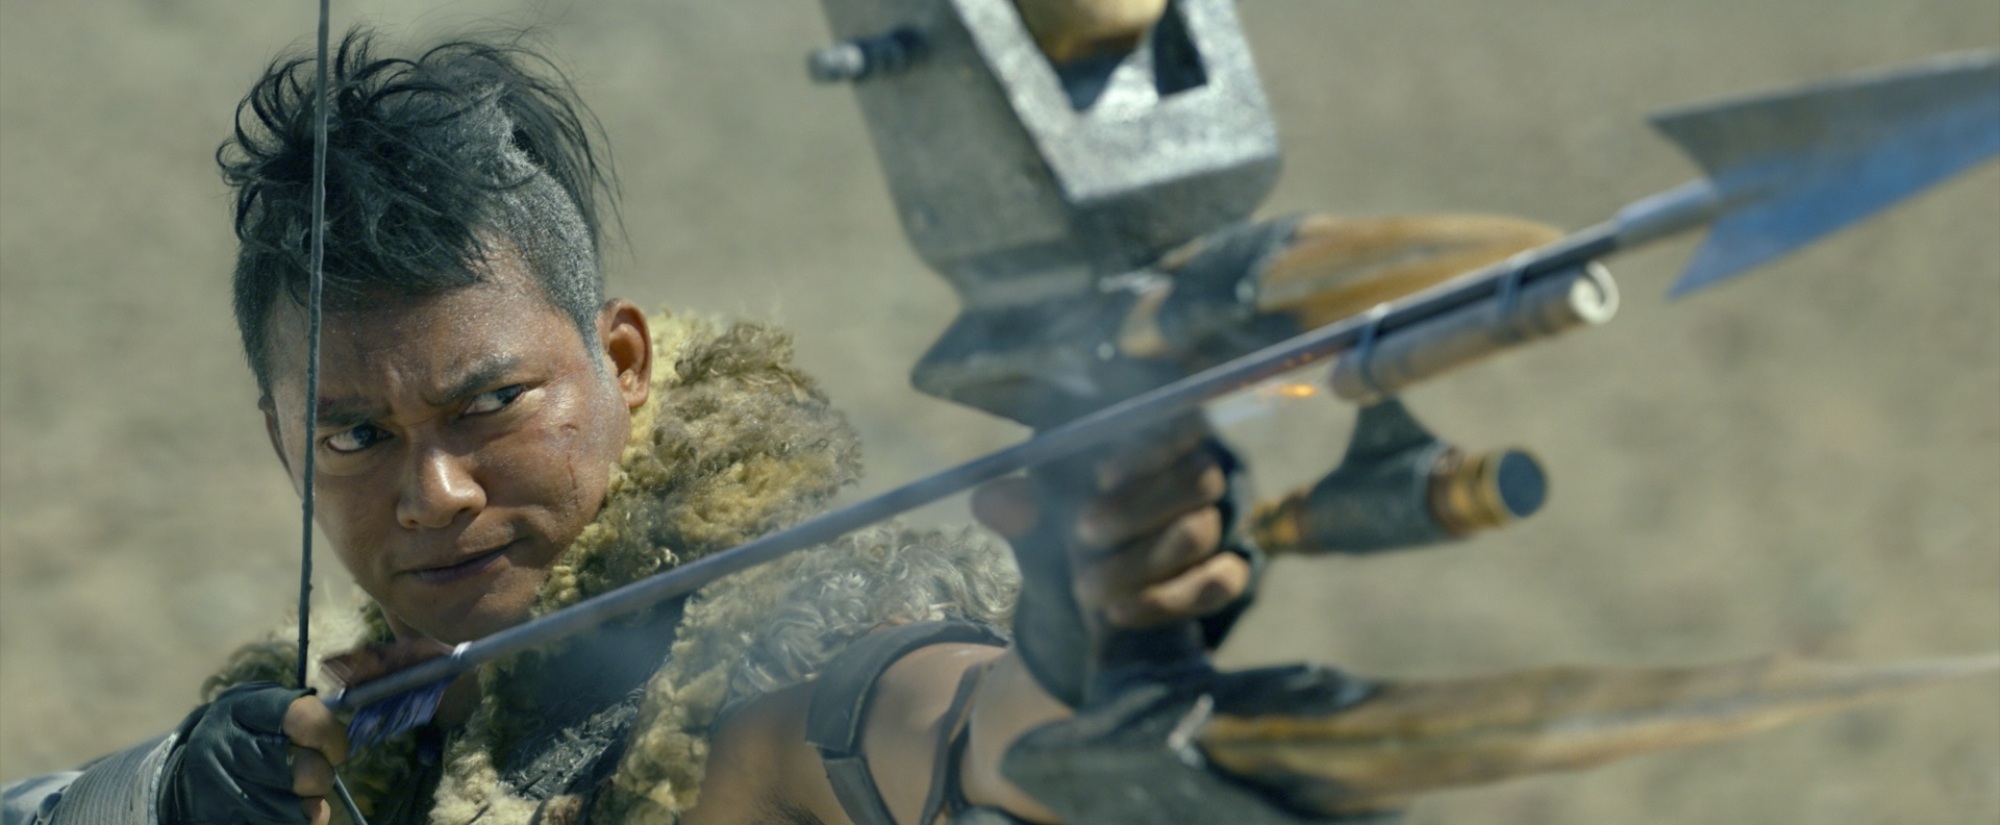 Monster Hunter' Review: Milla Jovovich and Tony Jaa Fight CG Beasties